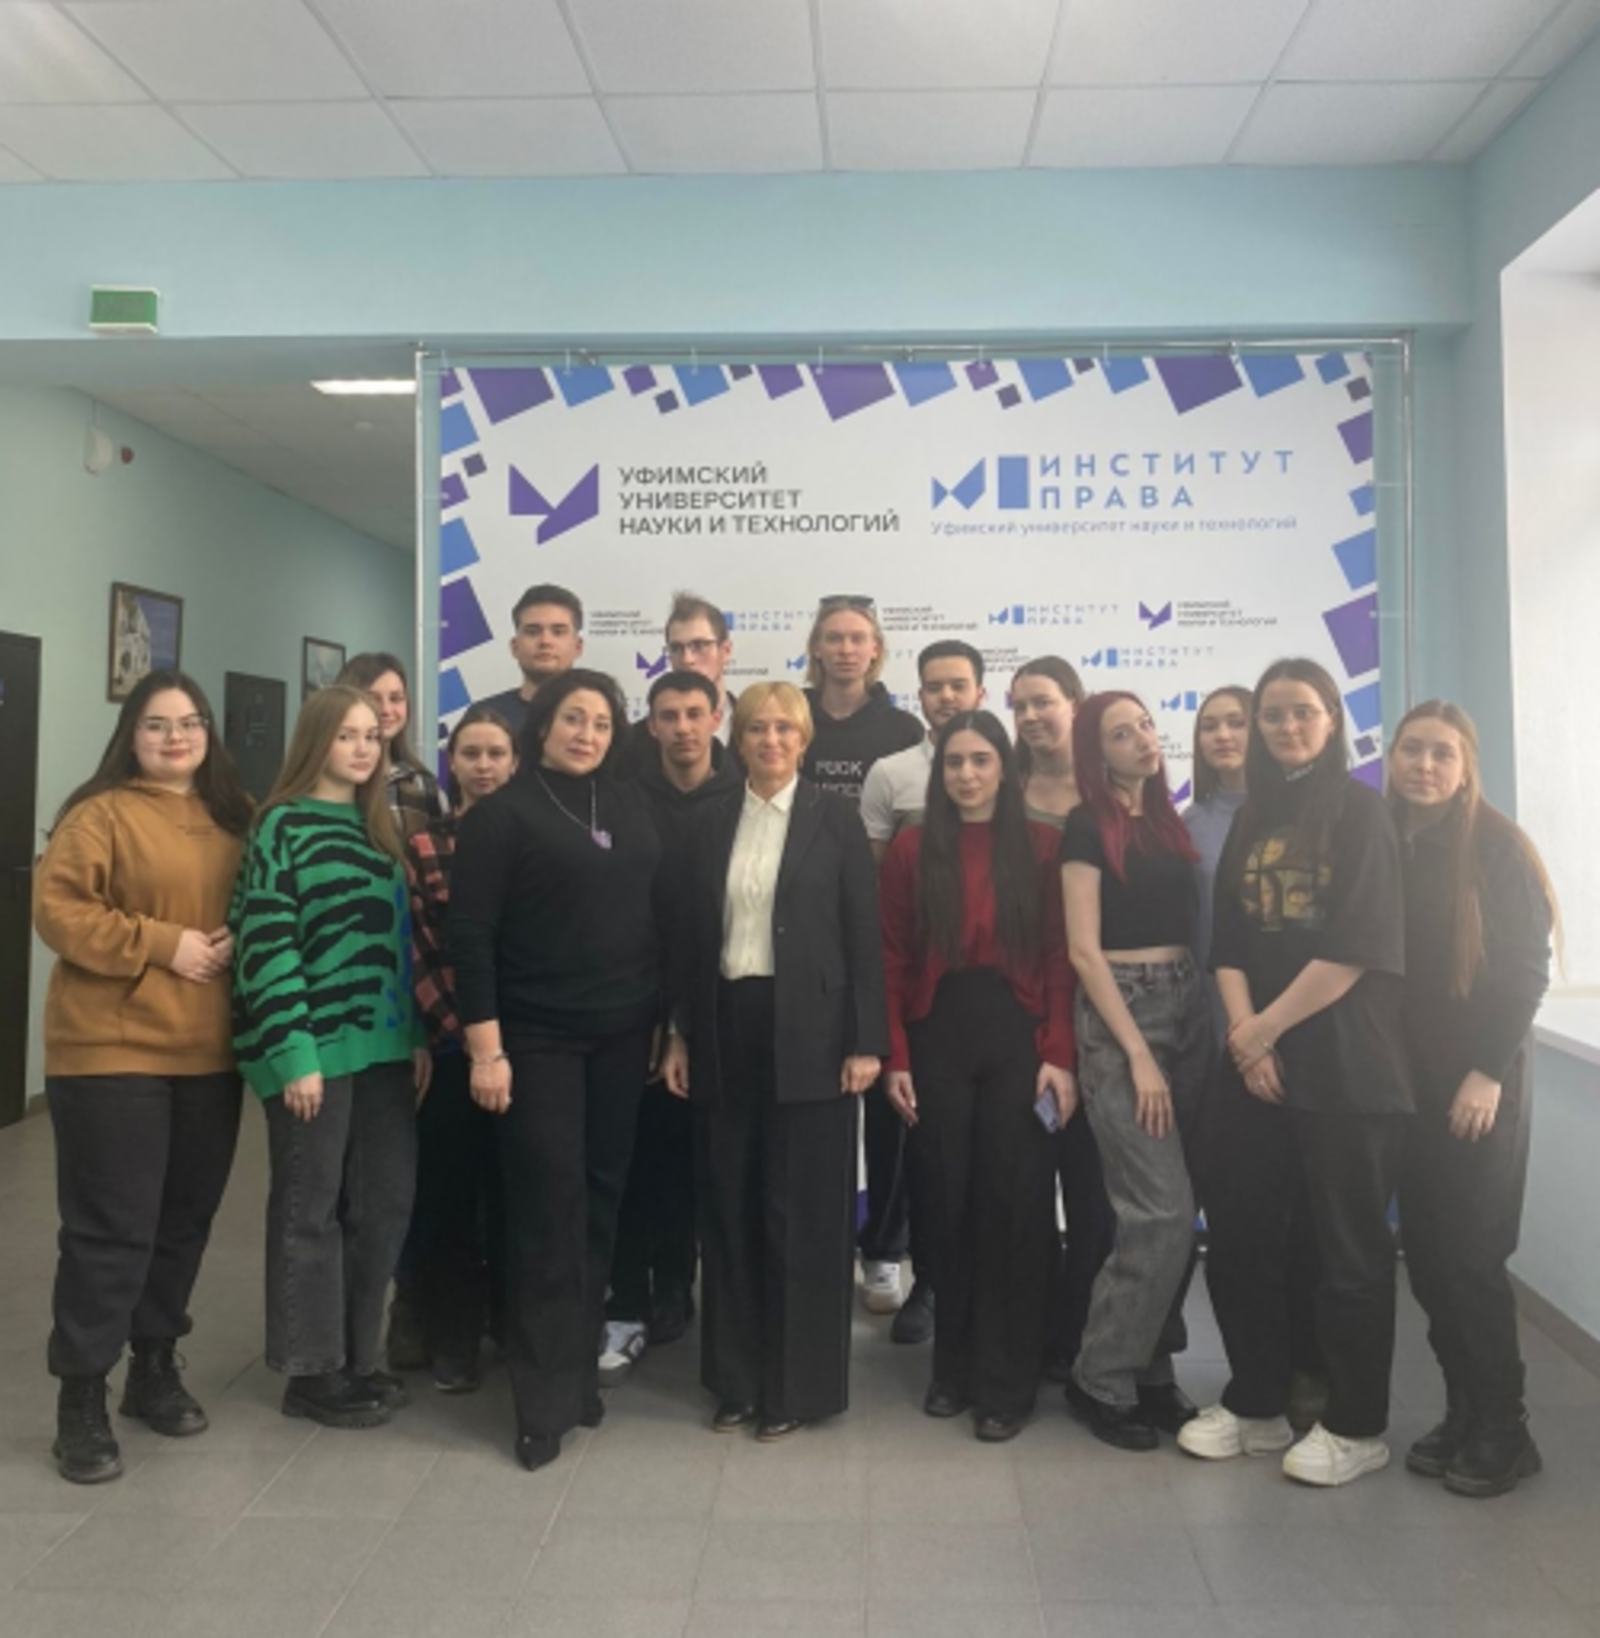 Бизнес-омбудсмен Ирина Абрамова прочитала лекцию студентам Уфимского университета науки и технологий